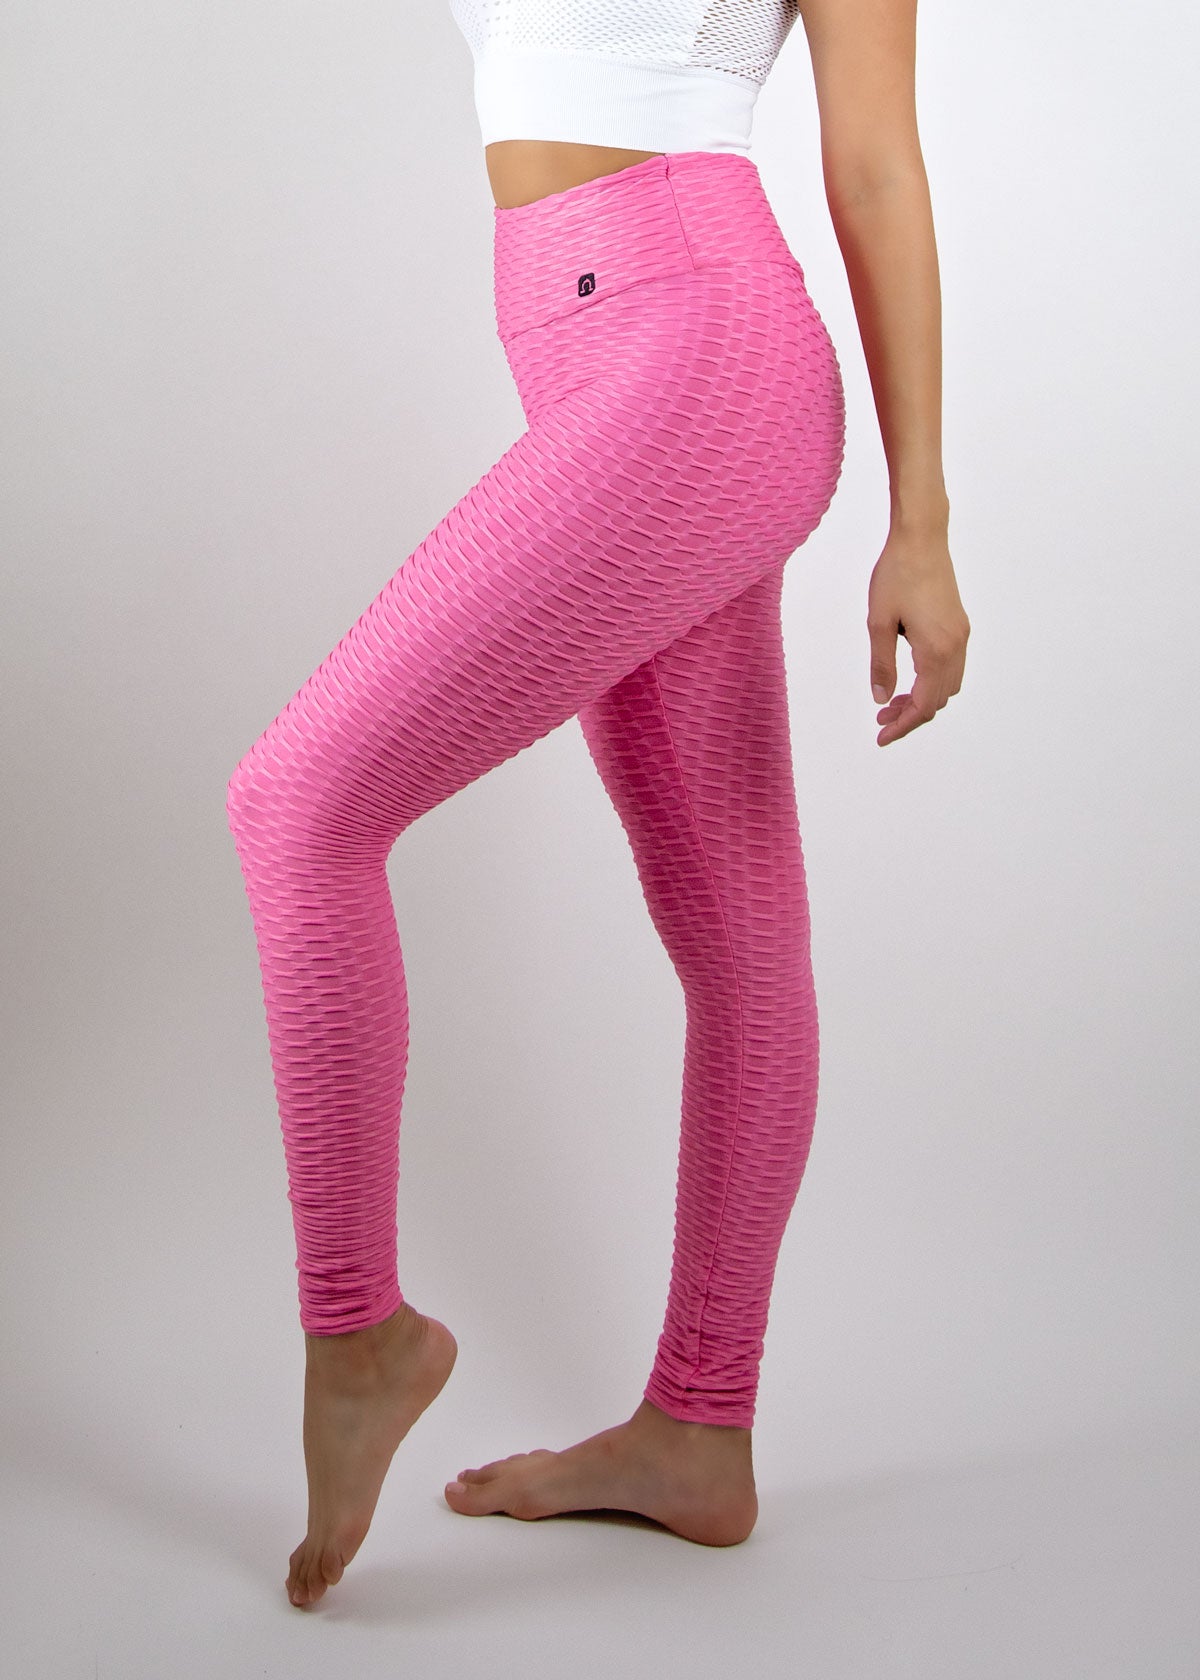 WOMEN ANTI-CELLULITE YOGA Pants Push Up TikTok Leggings Honeycomb Fitness  Gym UK £7.74 - PicClick UK